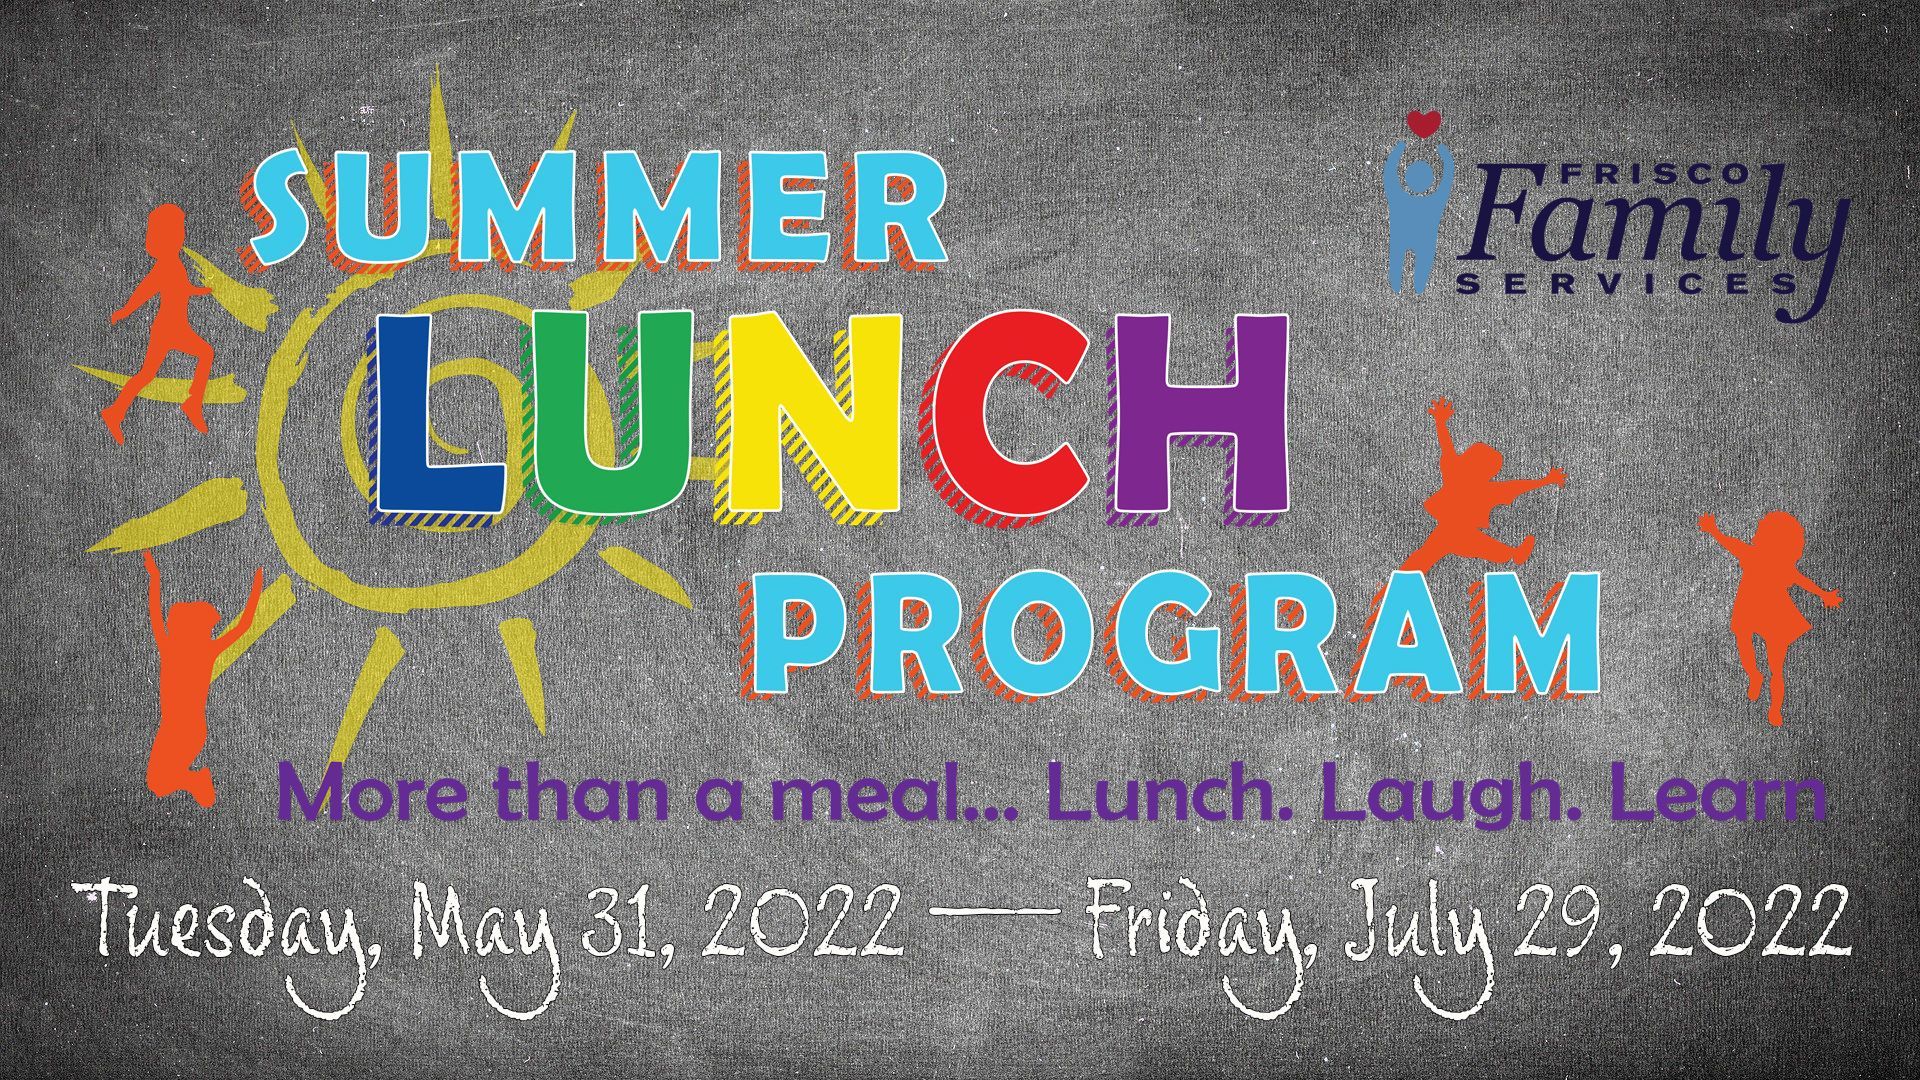 2023 Summer Lunch Program Frisco Family Services Events Calendar